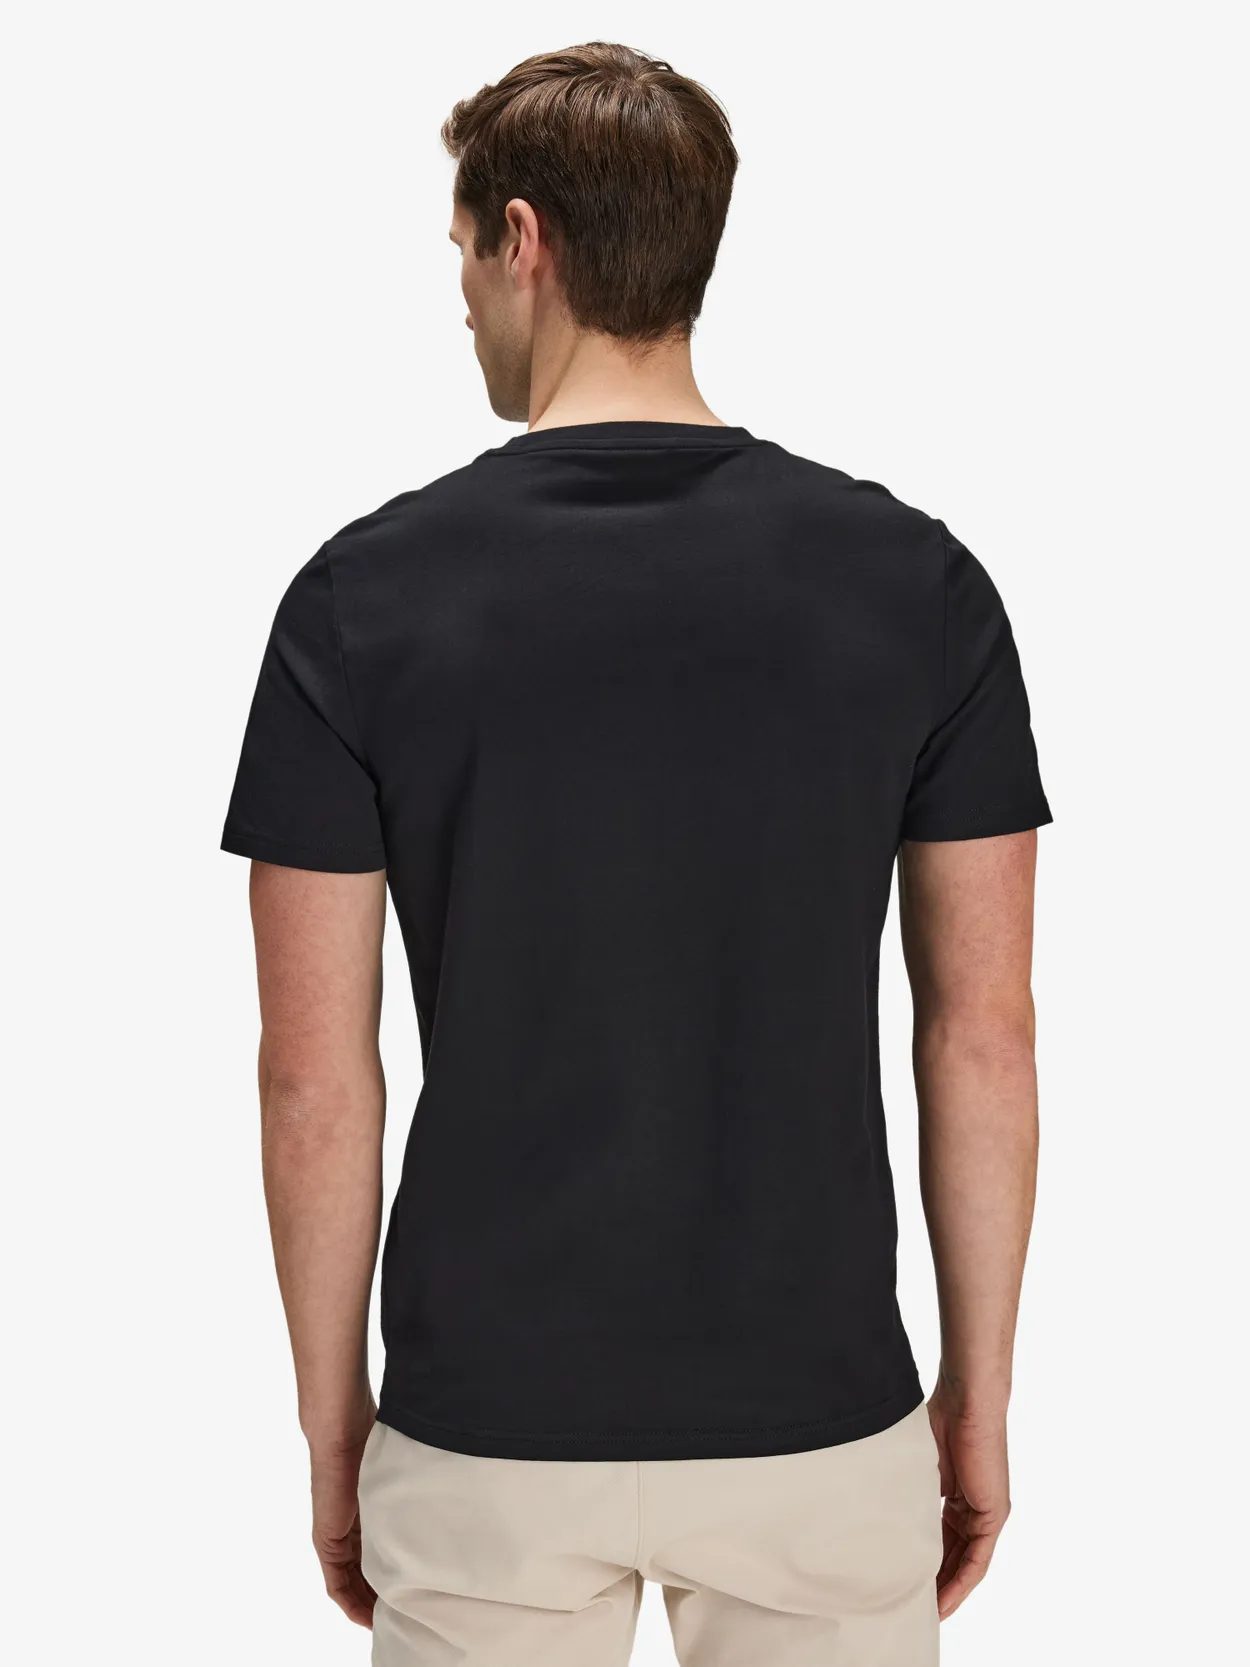 Image number 5 for product 2er-Pack weiße und schwarze T-Shirts